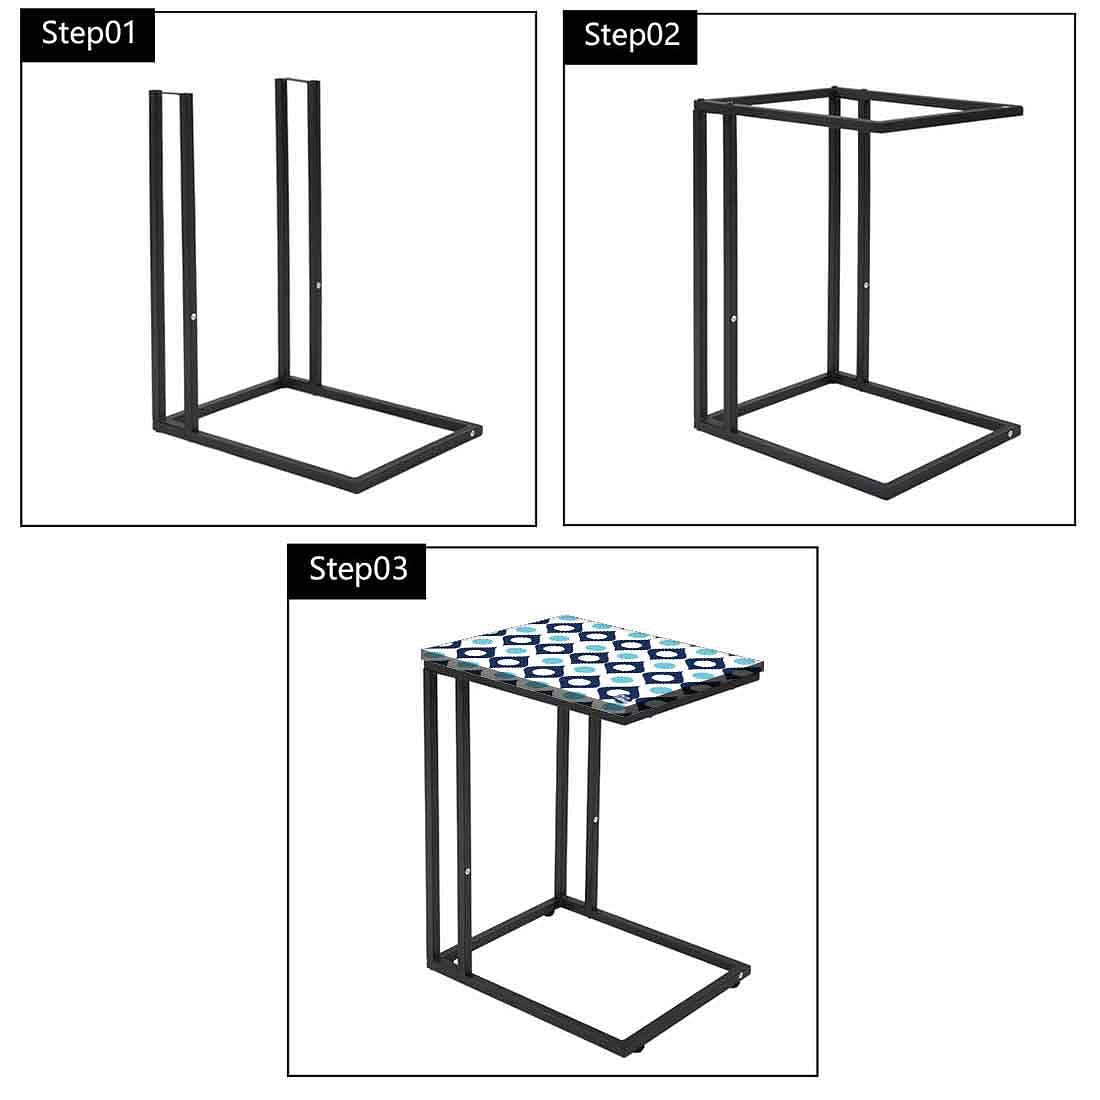 High-field Metal C Table For Sofa - Shades of Blue Retro Nutcase